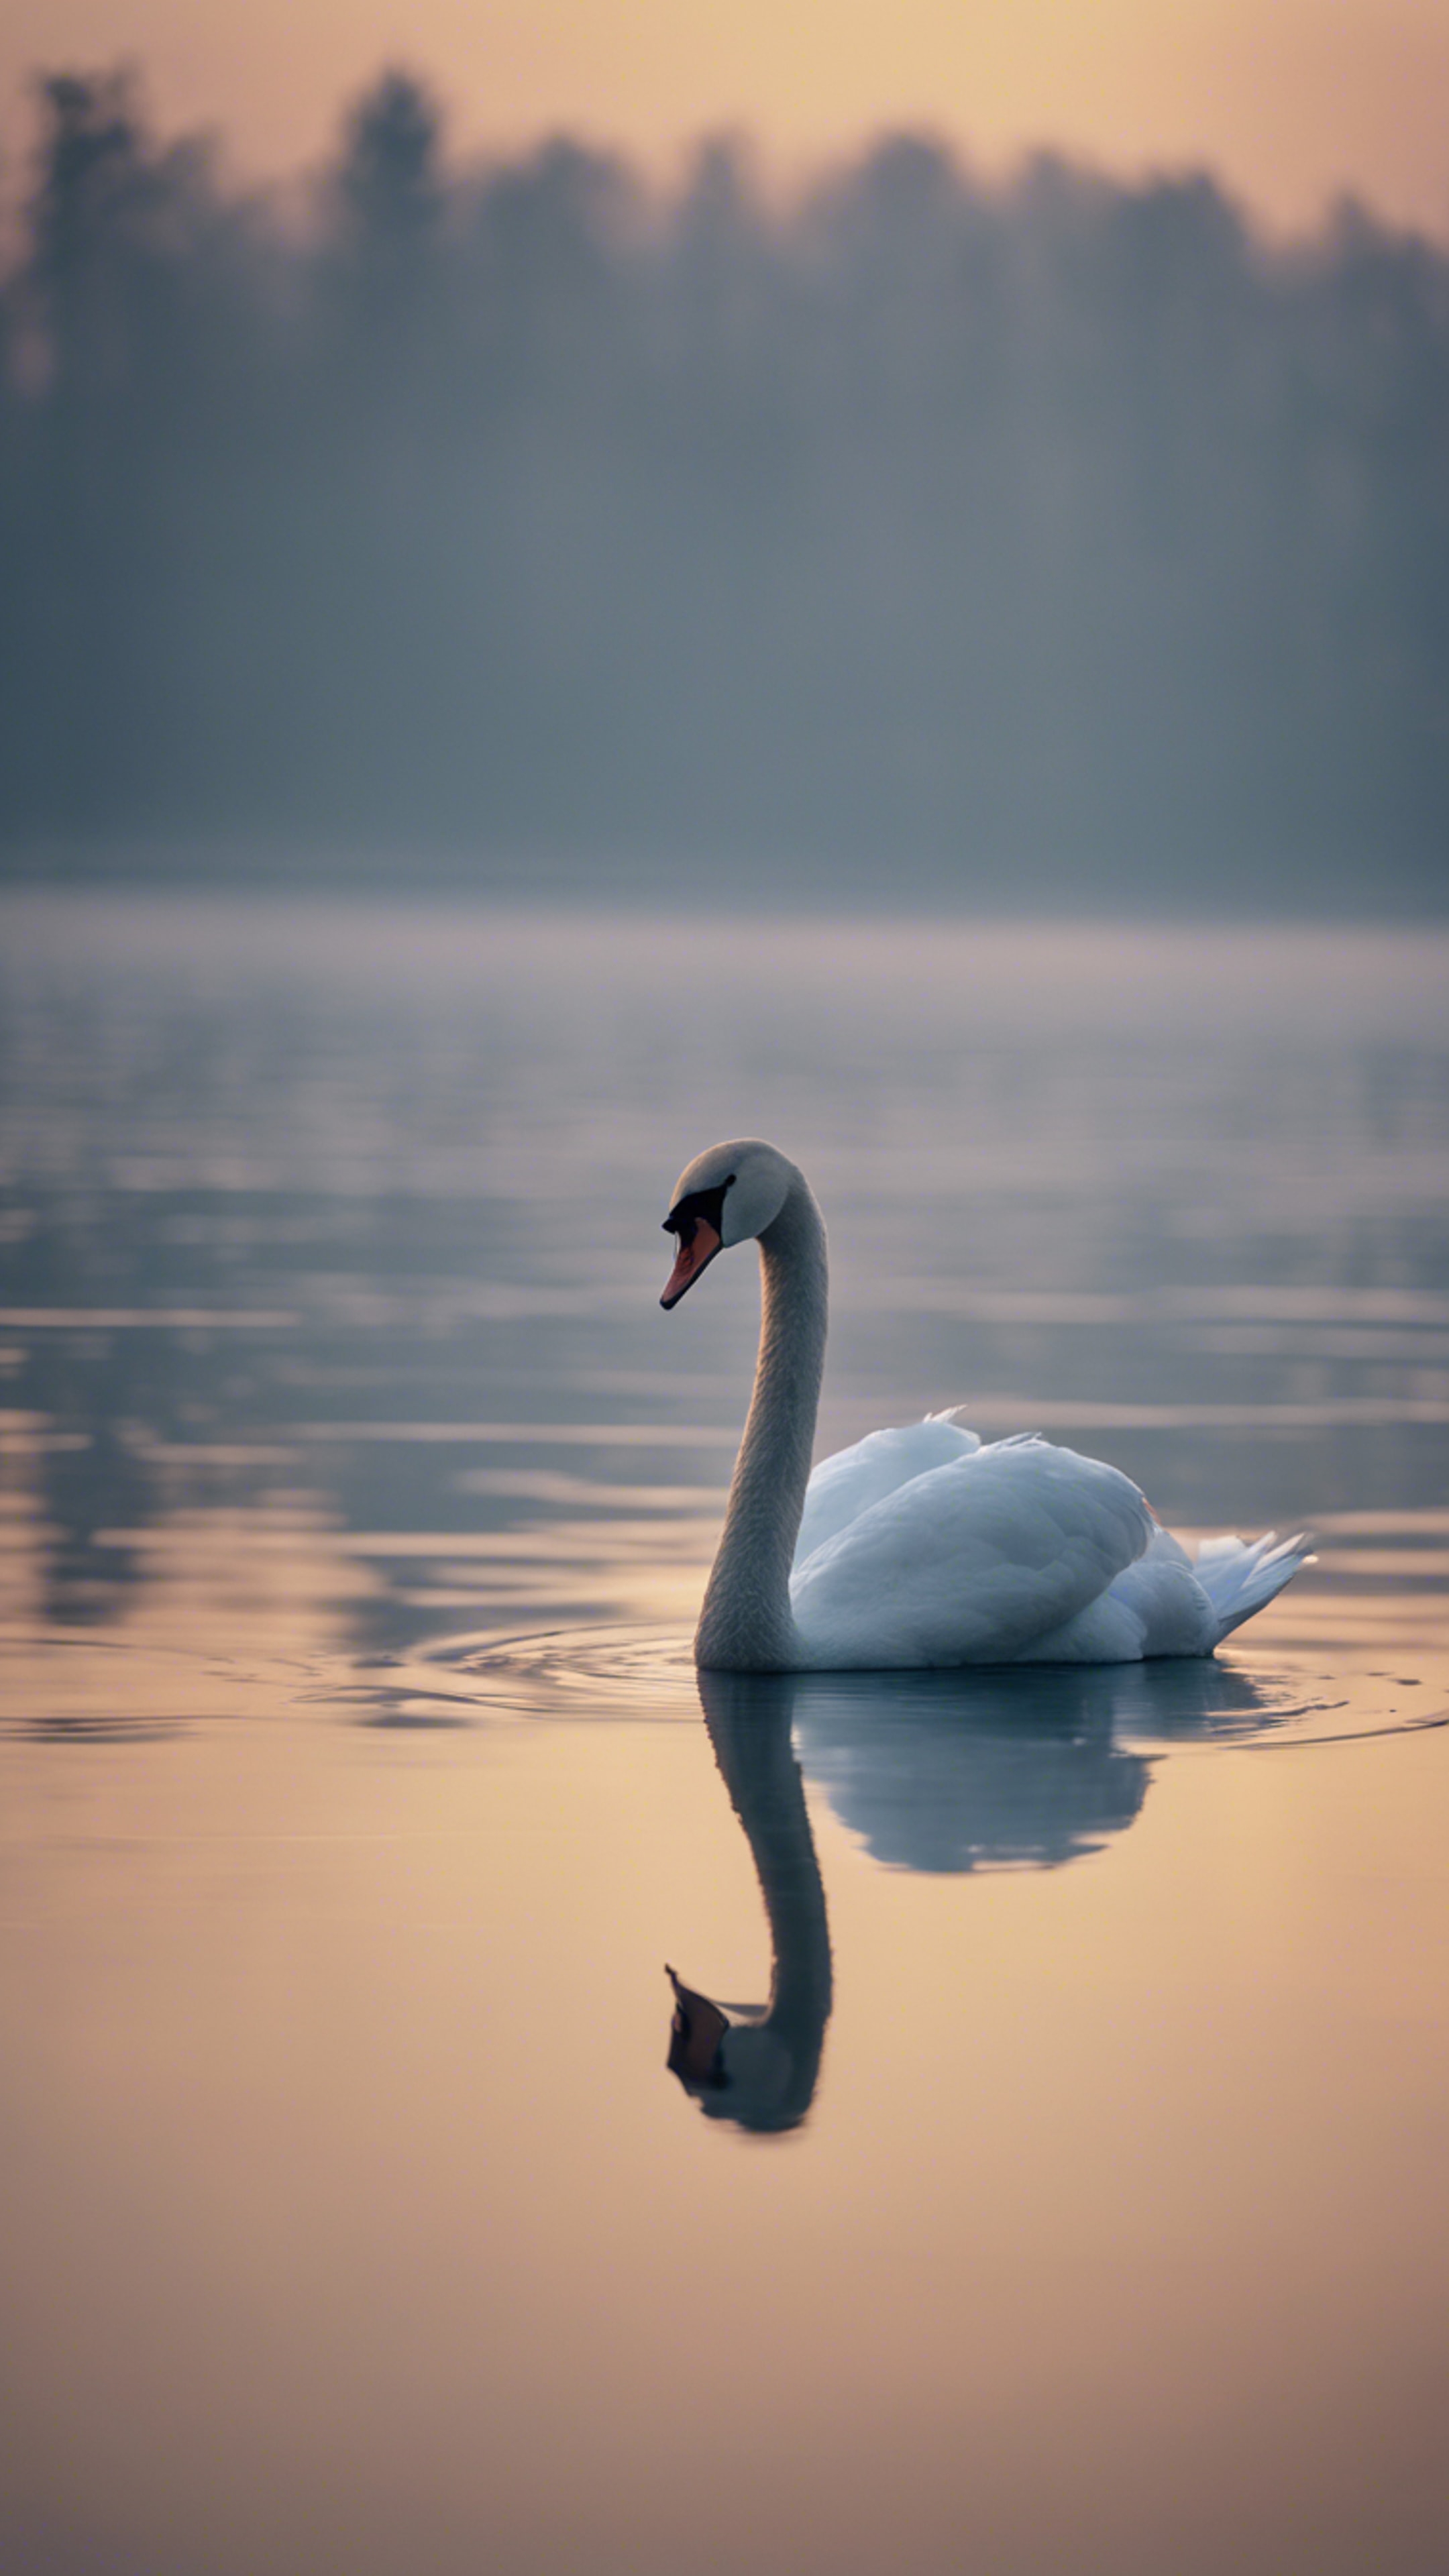 A single love-struck swan swimming alone in a desolate lake under the pallid glow of a gloomy moon. טפט[674930fc7c9f467a8426]